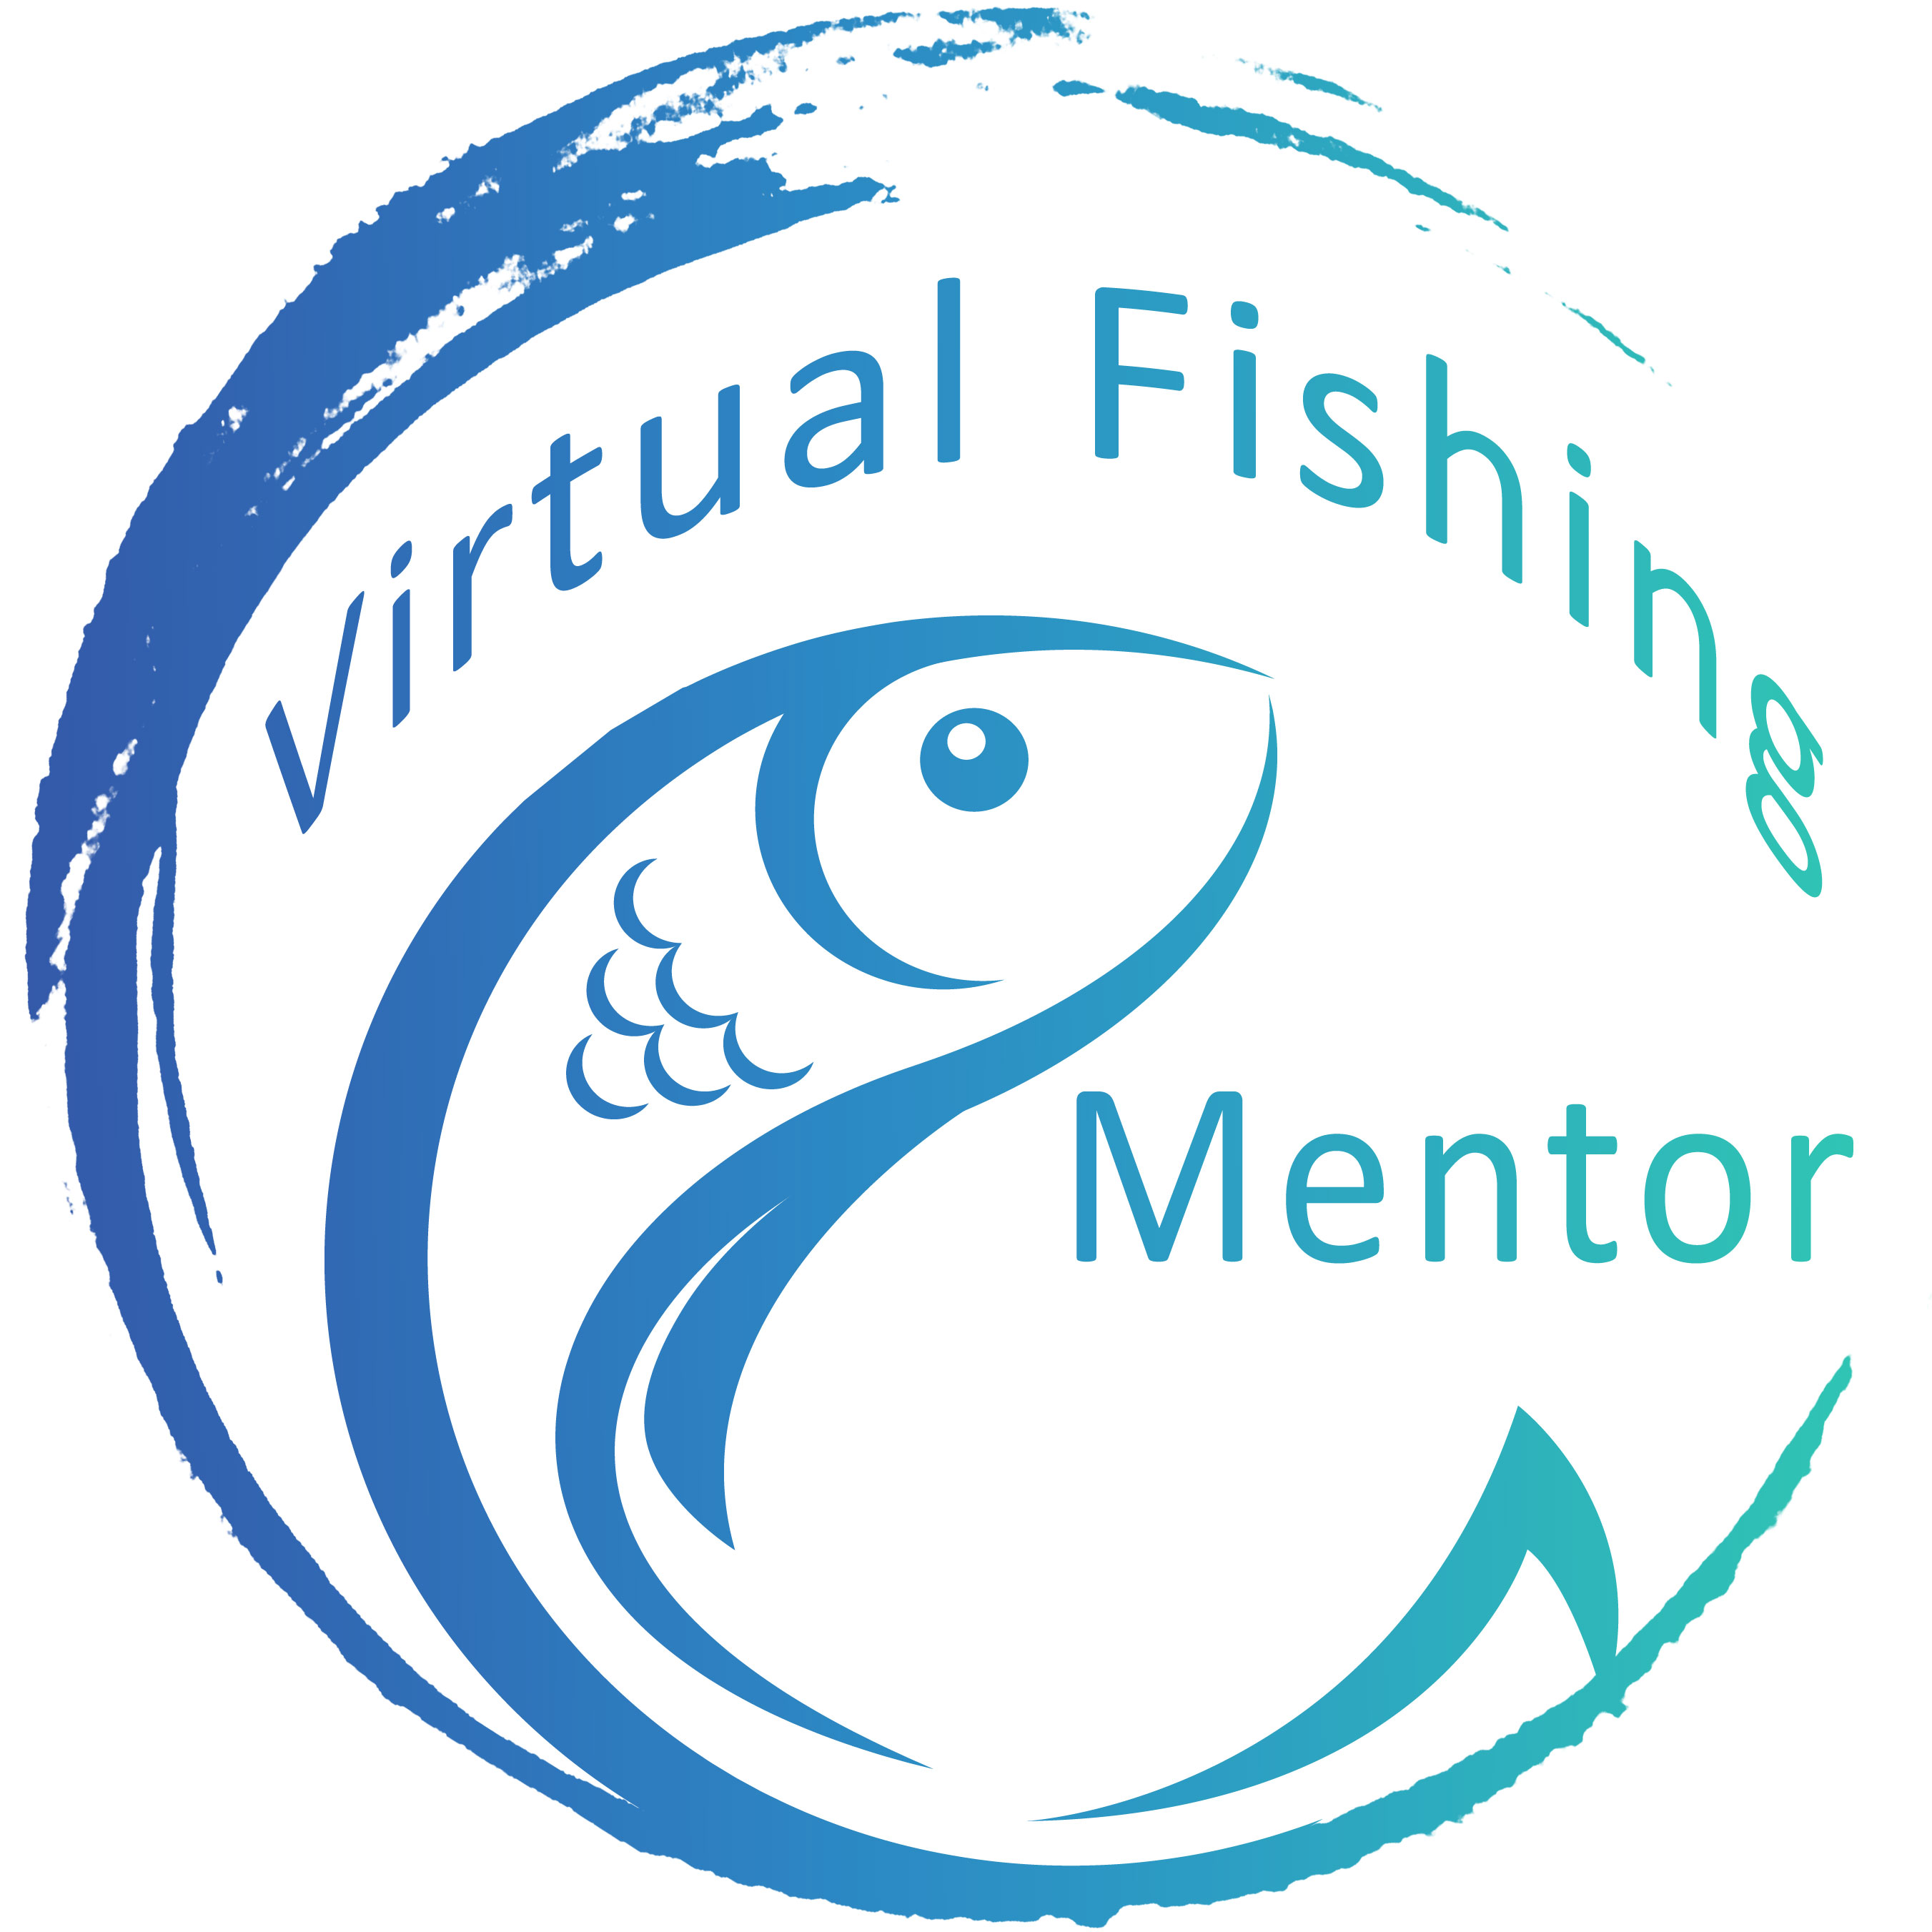 Fishing mentor logo - swoopy fish